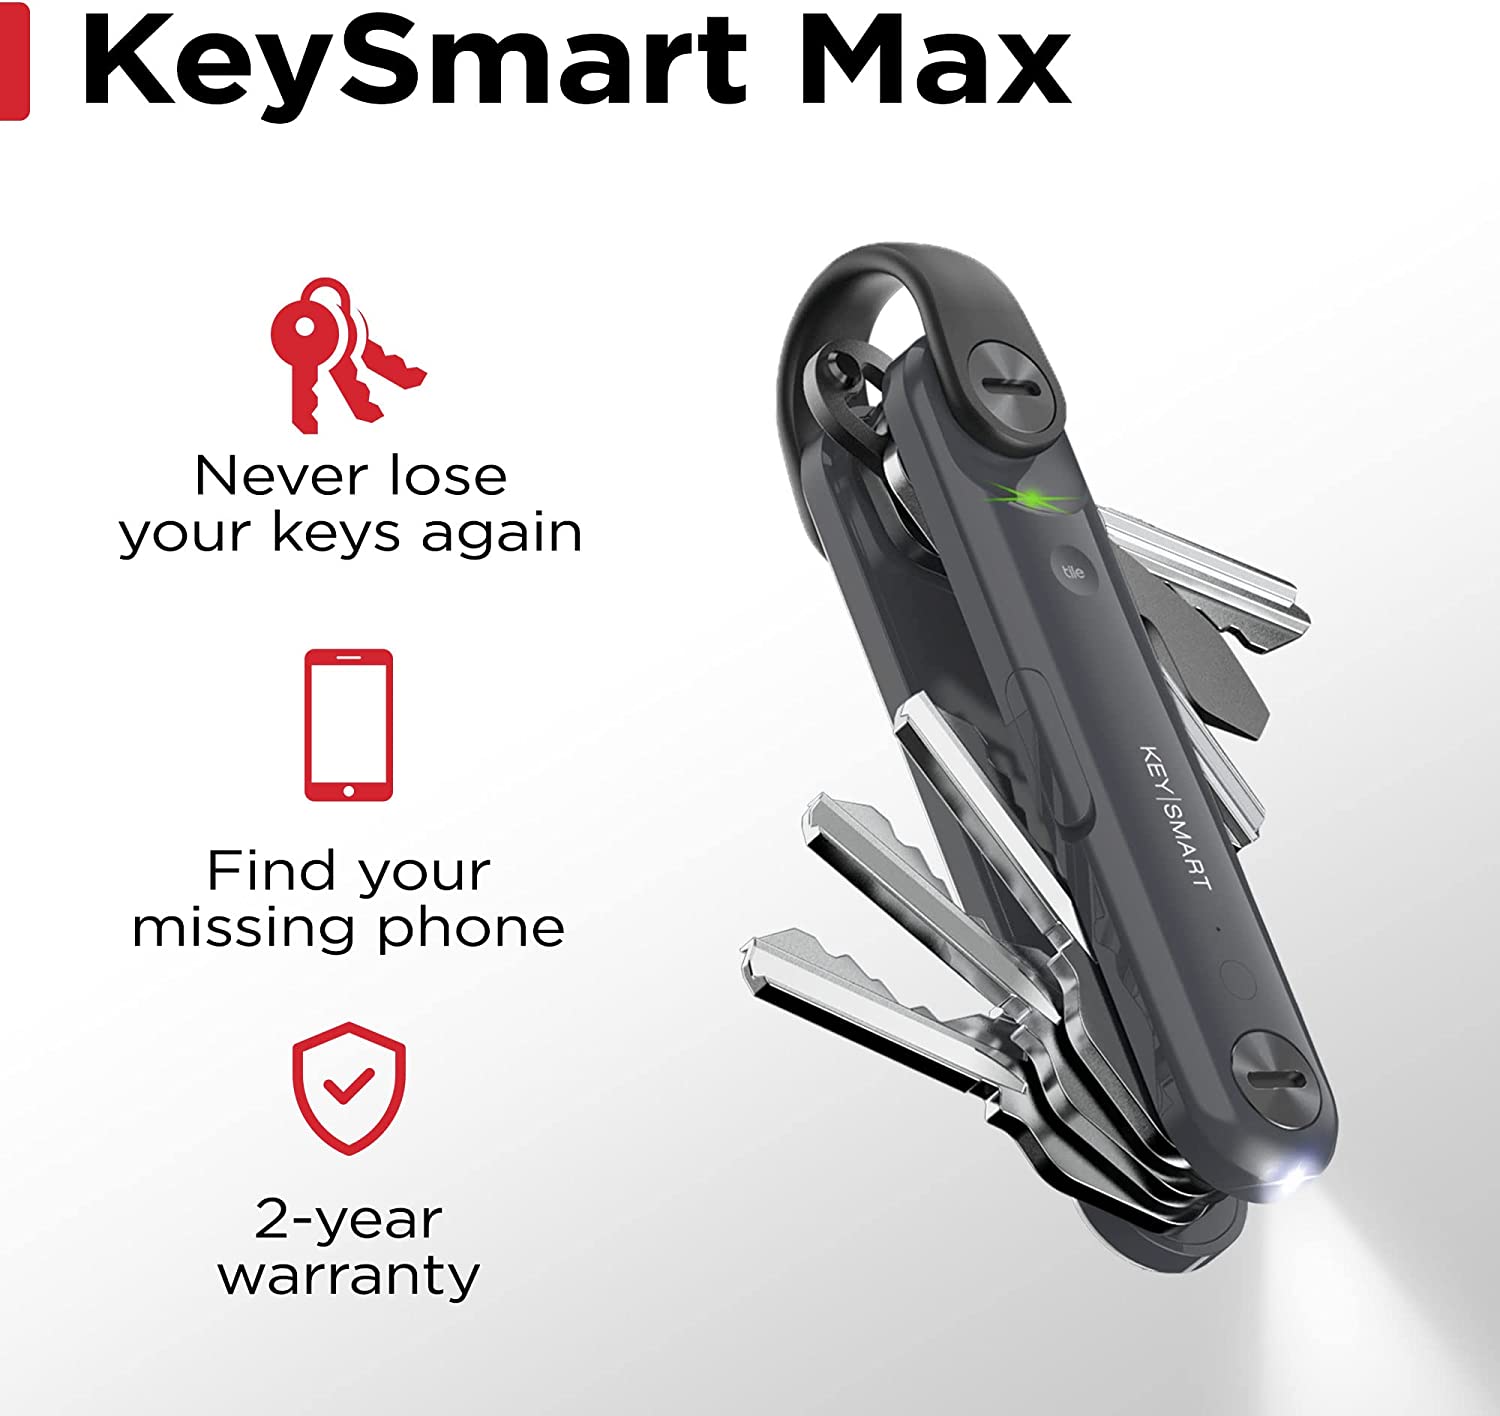 KeySmart Max Key Organizer